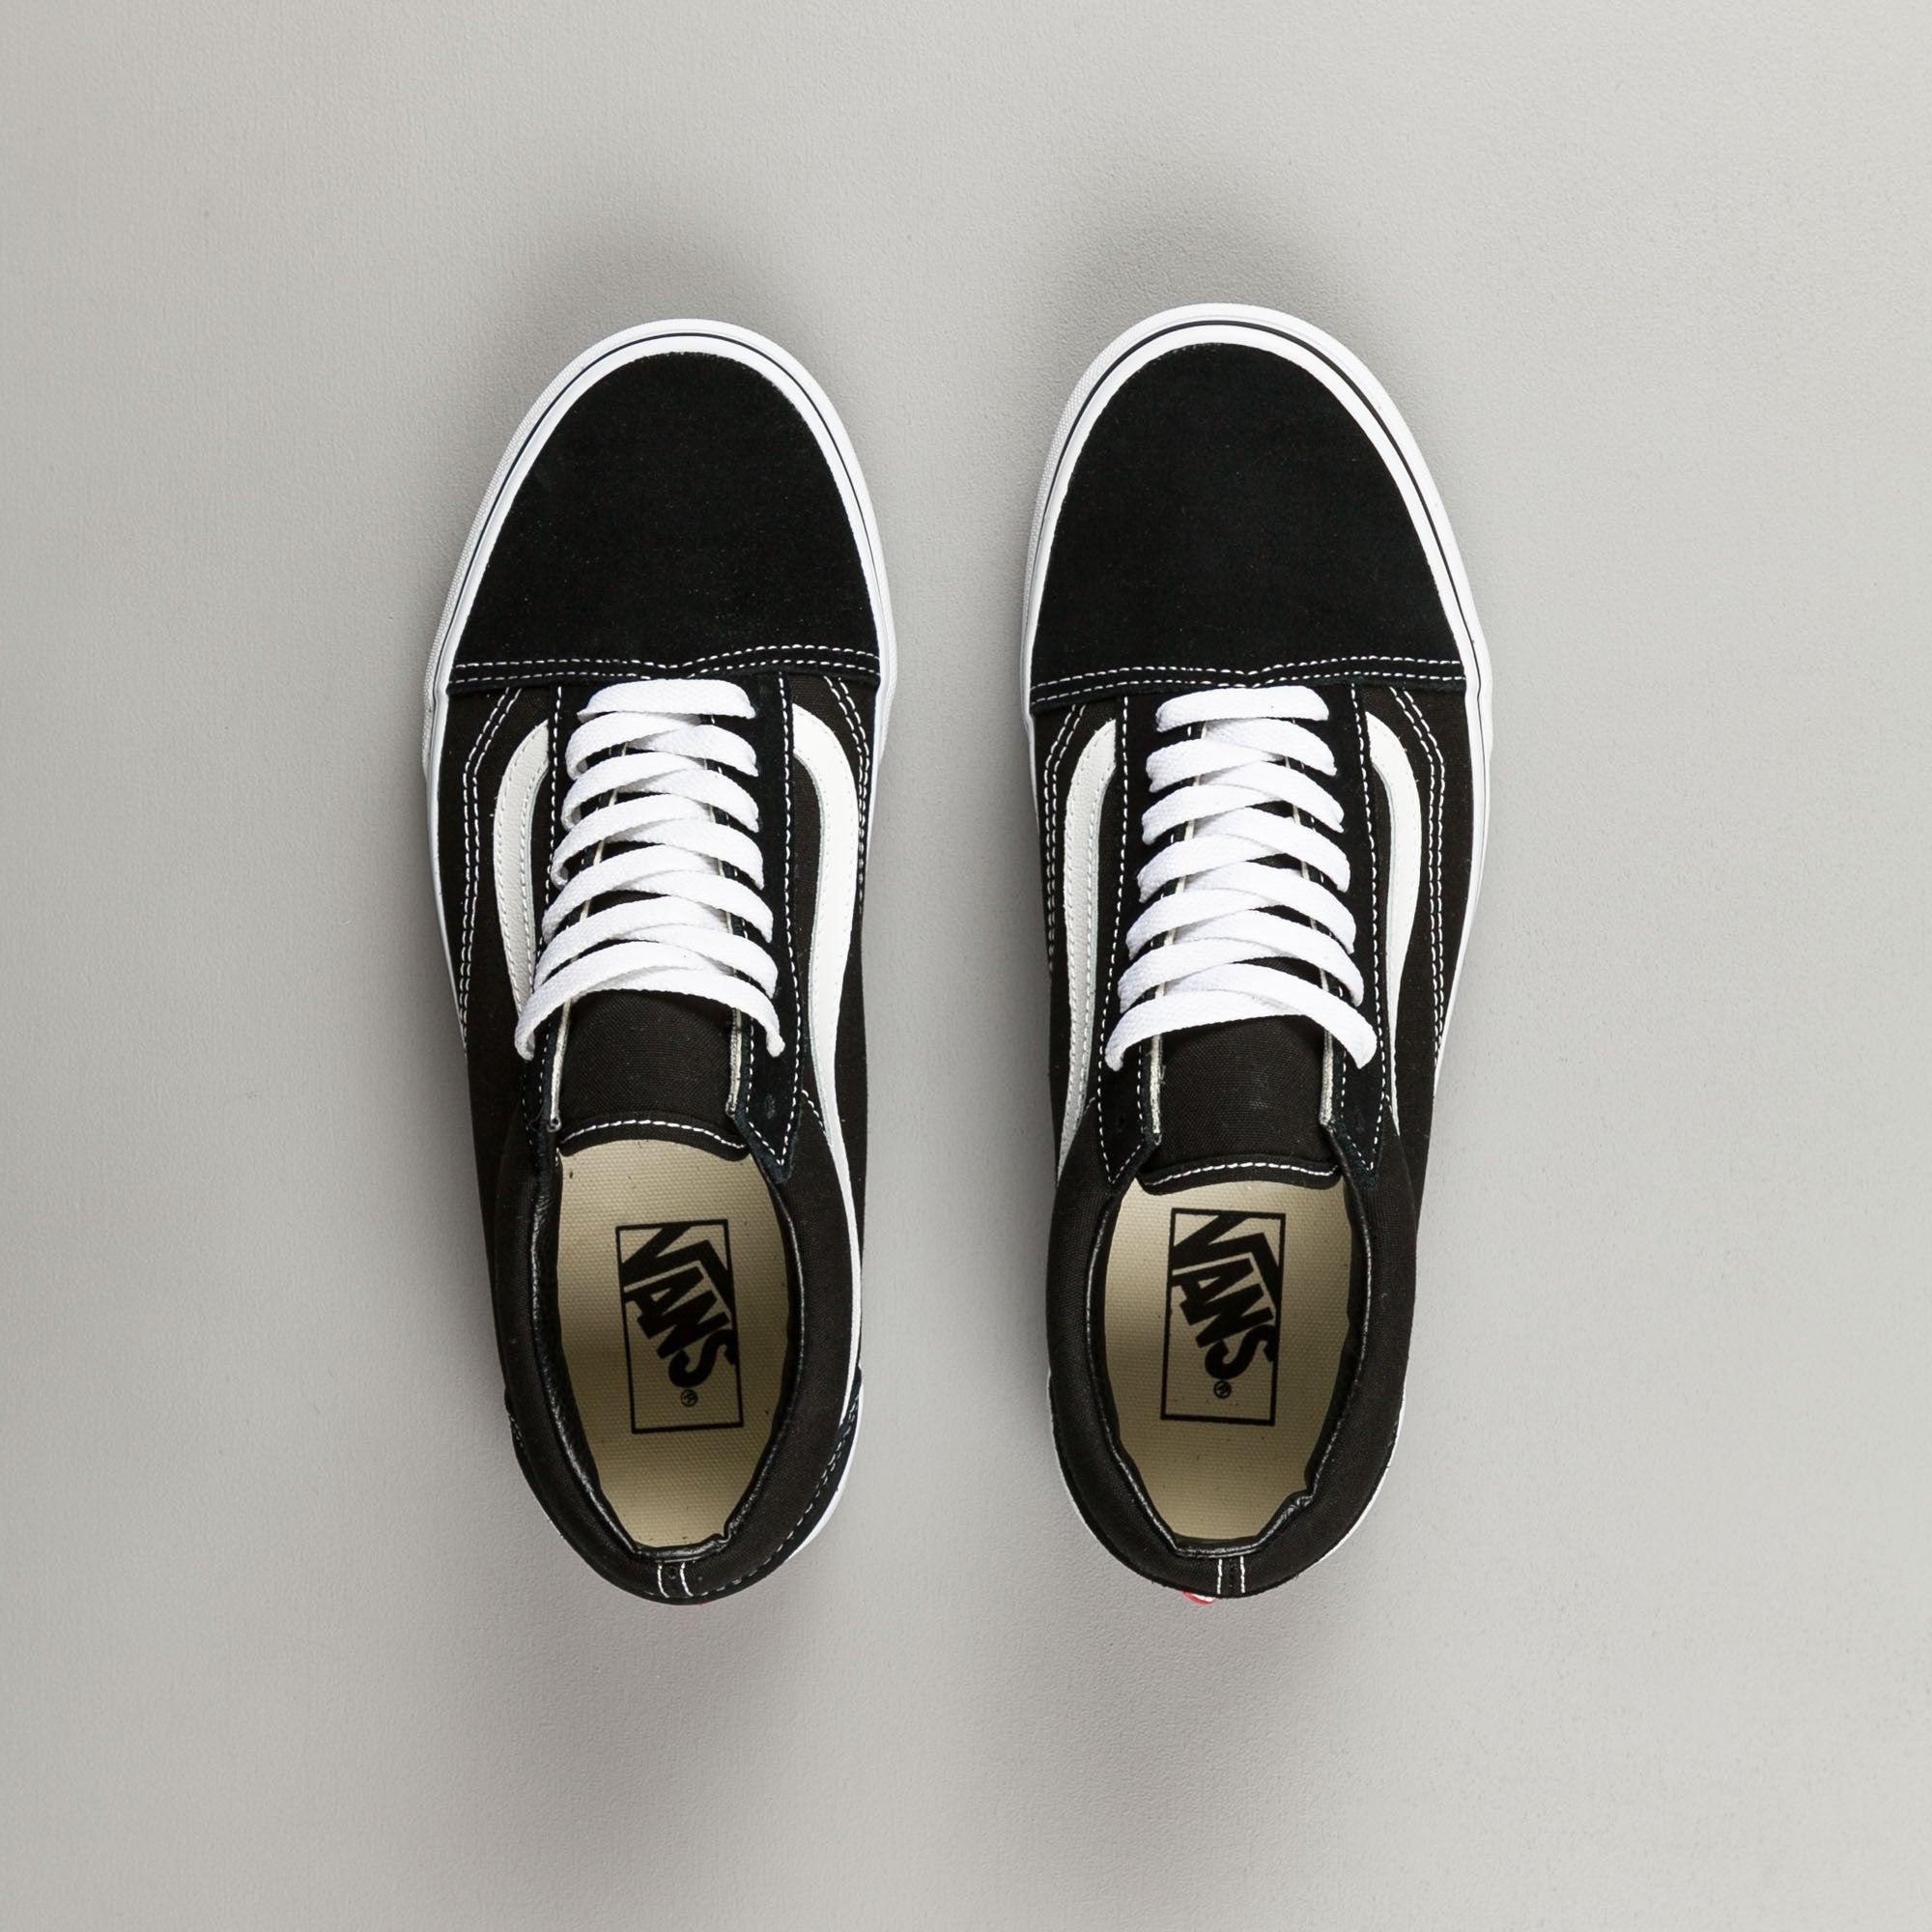 Vans Old Skool Shoes - Black / White | Flatspot